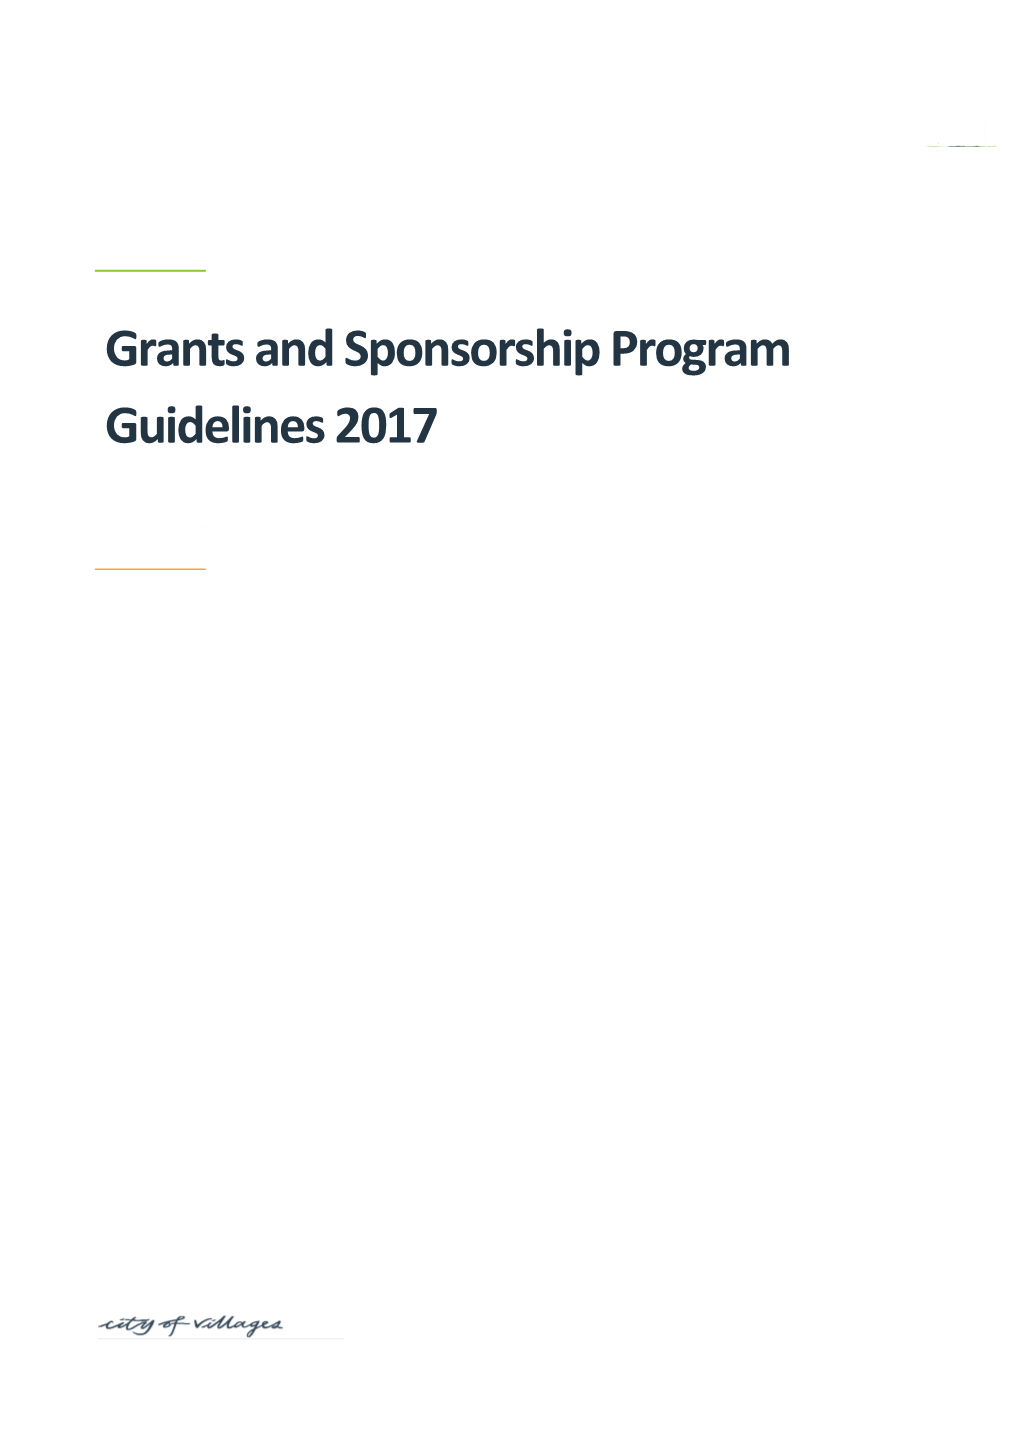 Grants and Sponsorship Program Guidelines August 2017